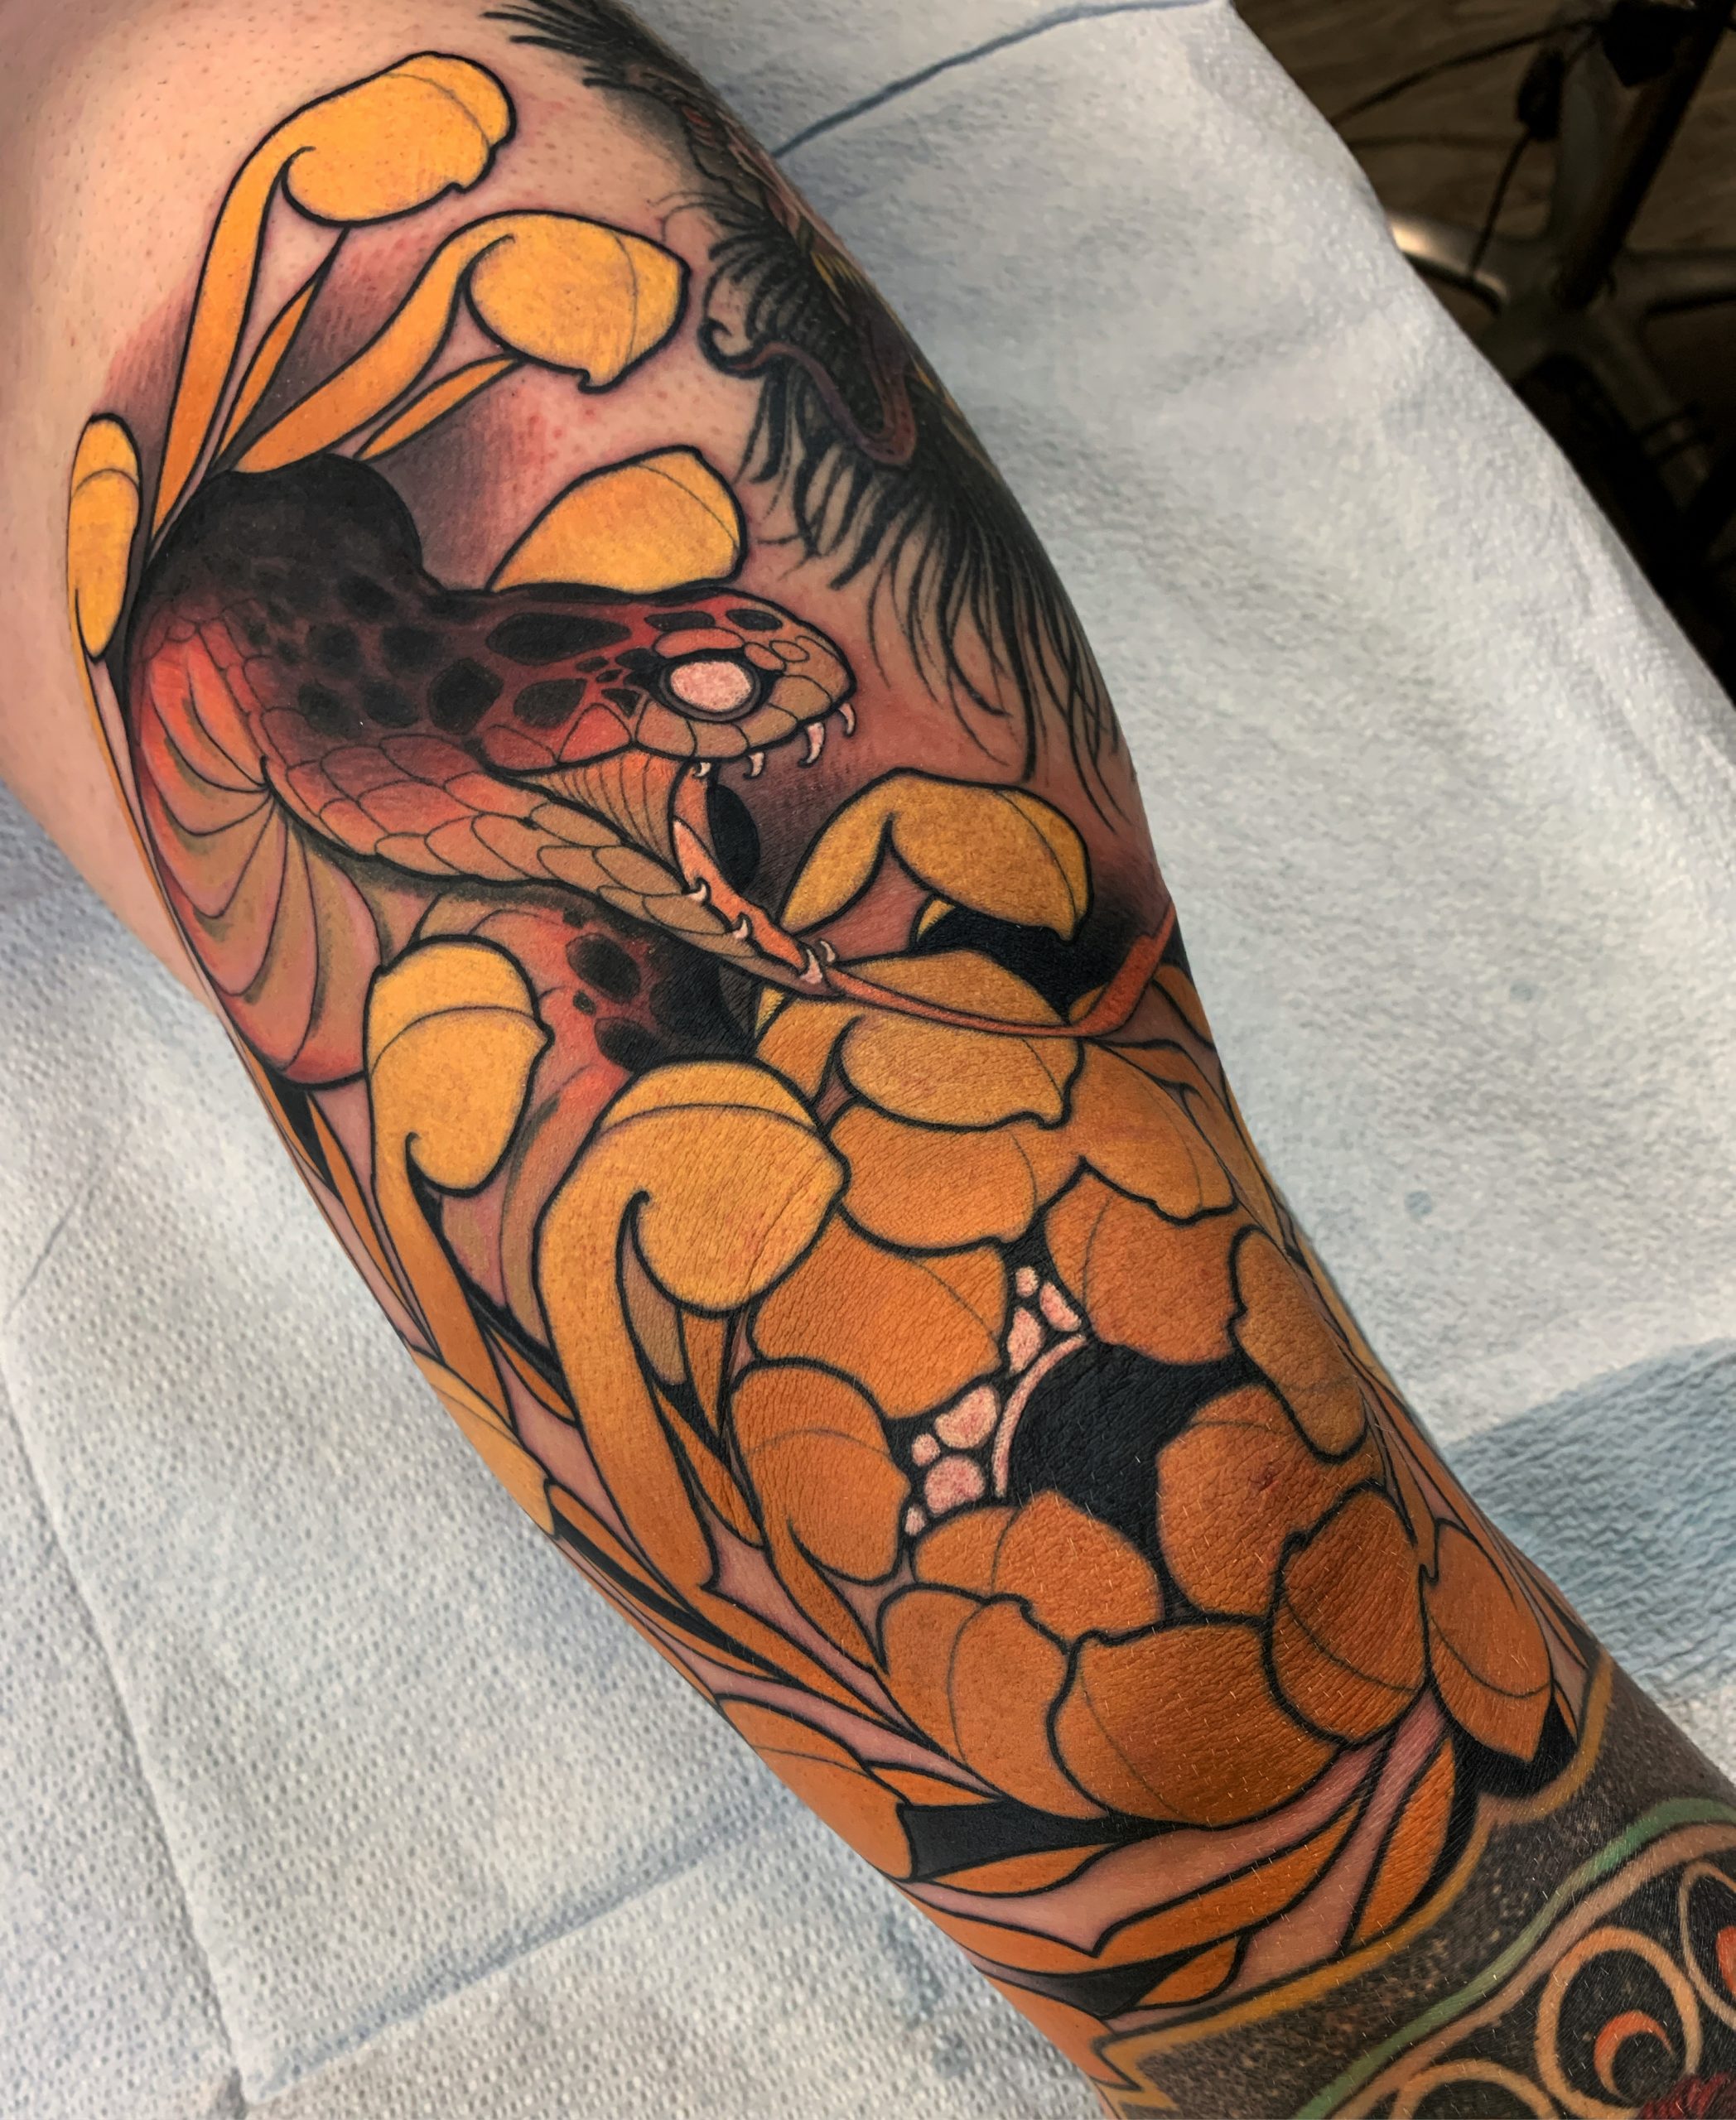 Sleeve work done by Randy Burnham at Sunshine State Tattoo in